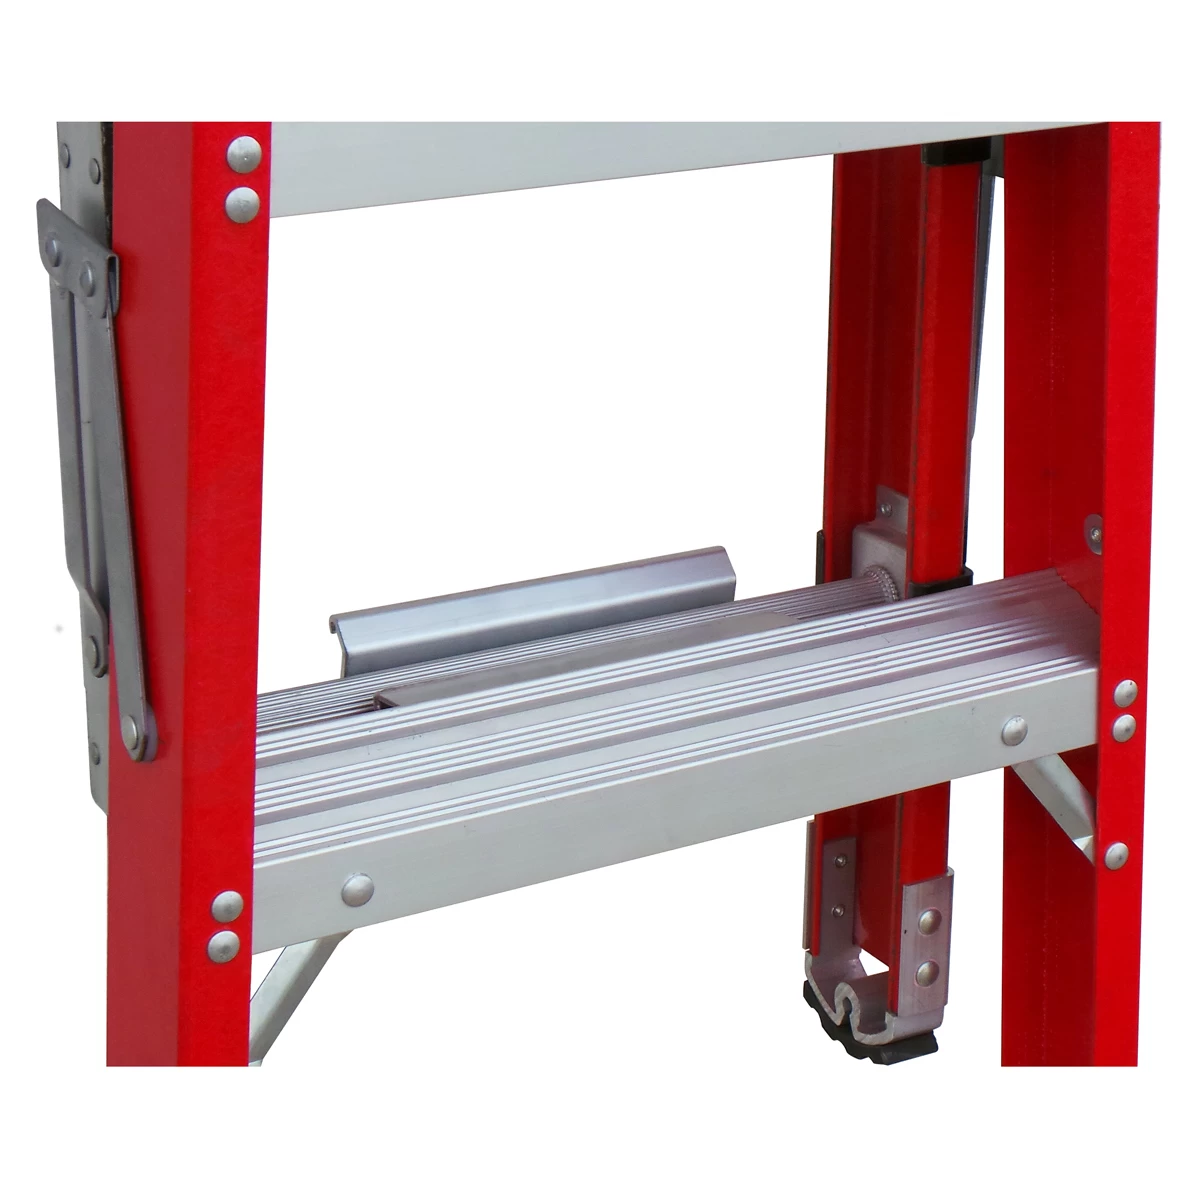 Xingon professional fiberglass platform step ladder with safety gate ANSI 207L